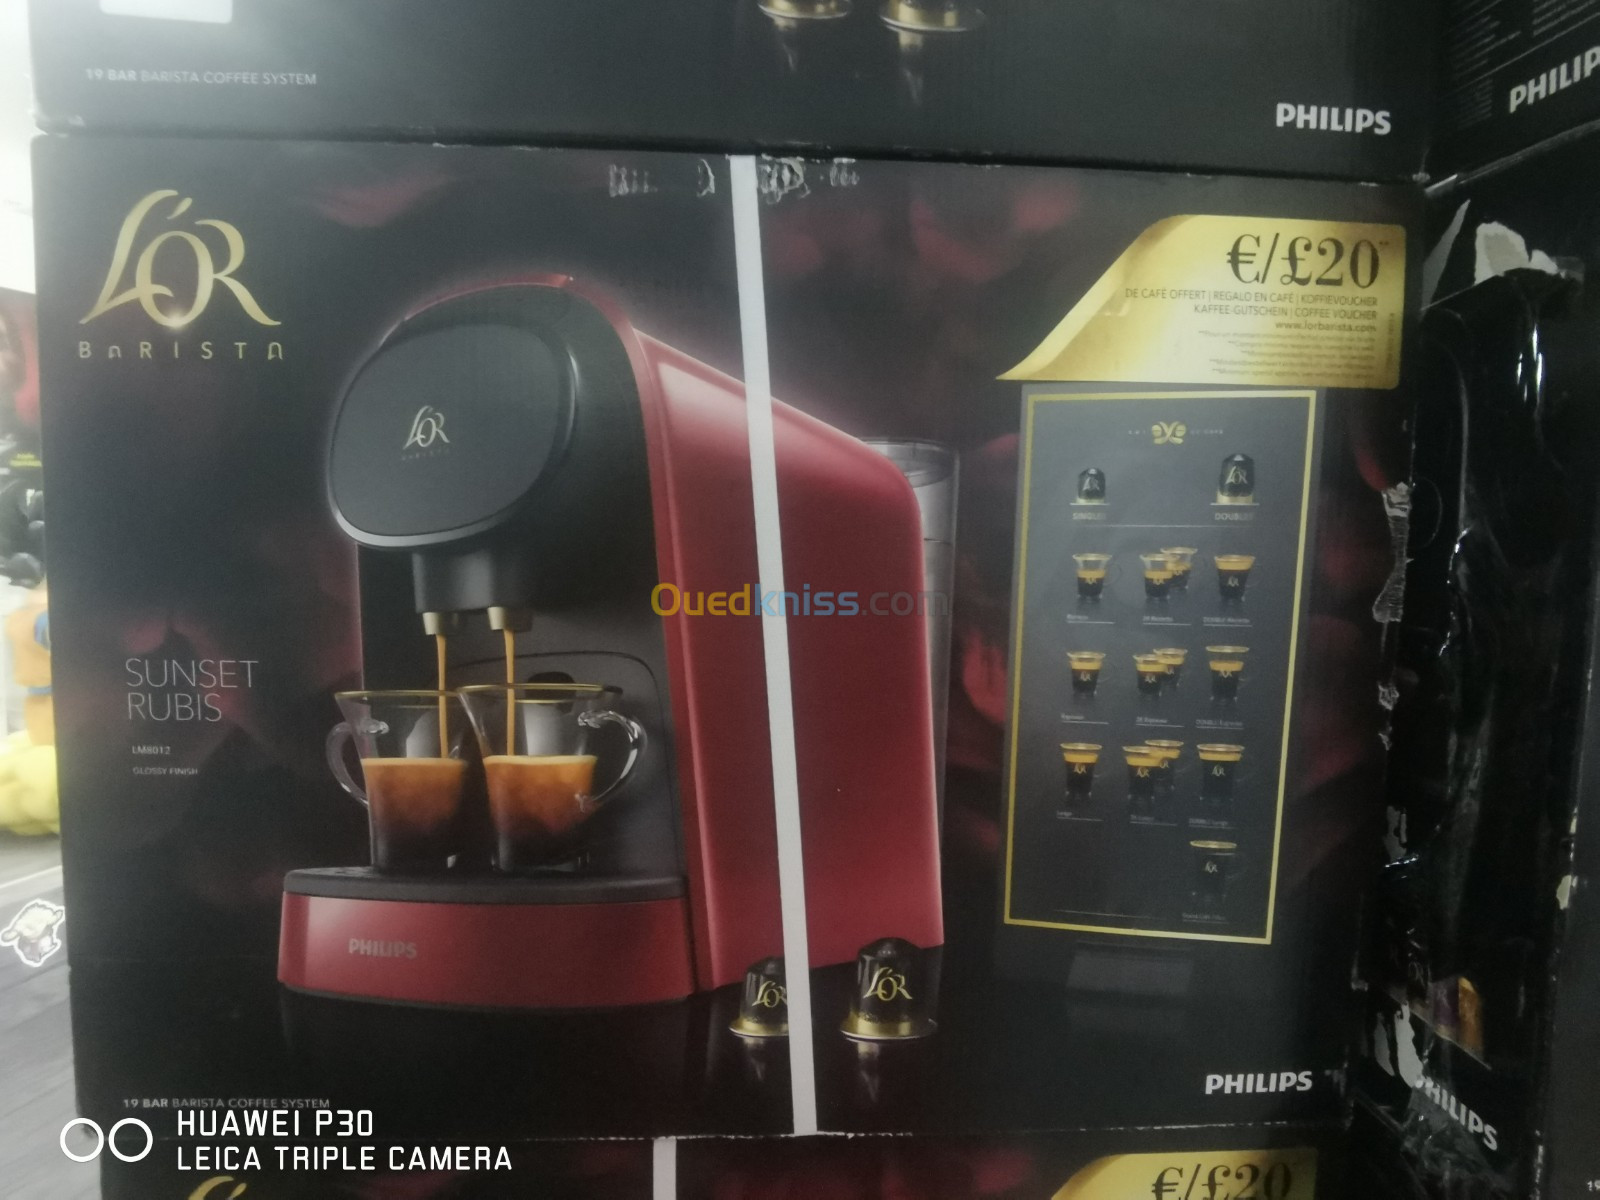 Machine à café a capsules L'OR Barista - الجزائر الجزائر